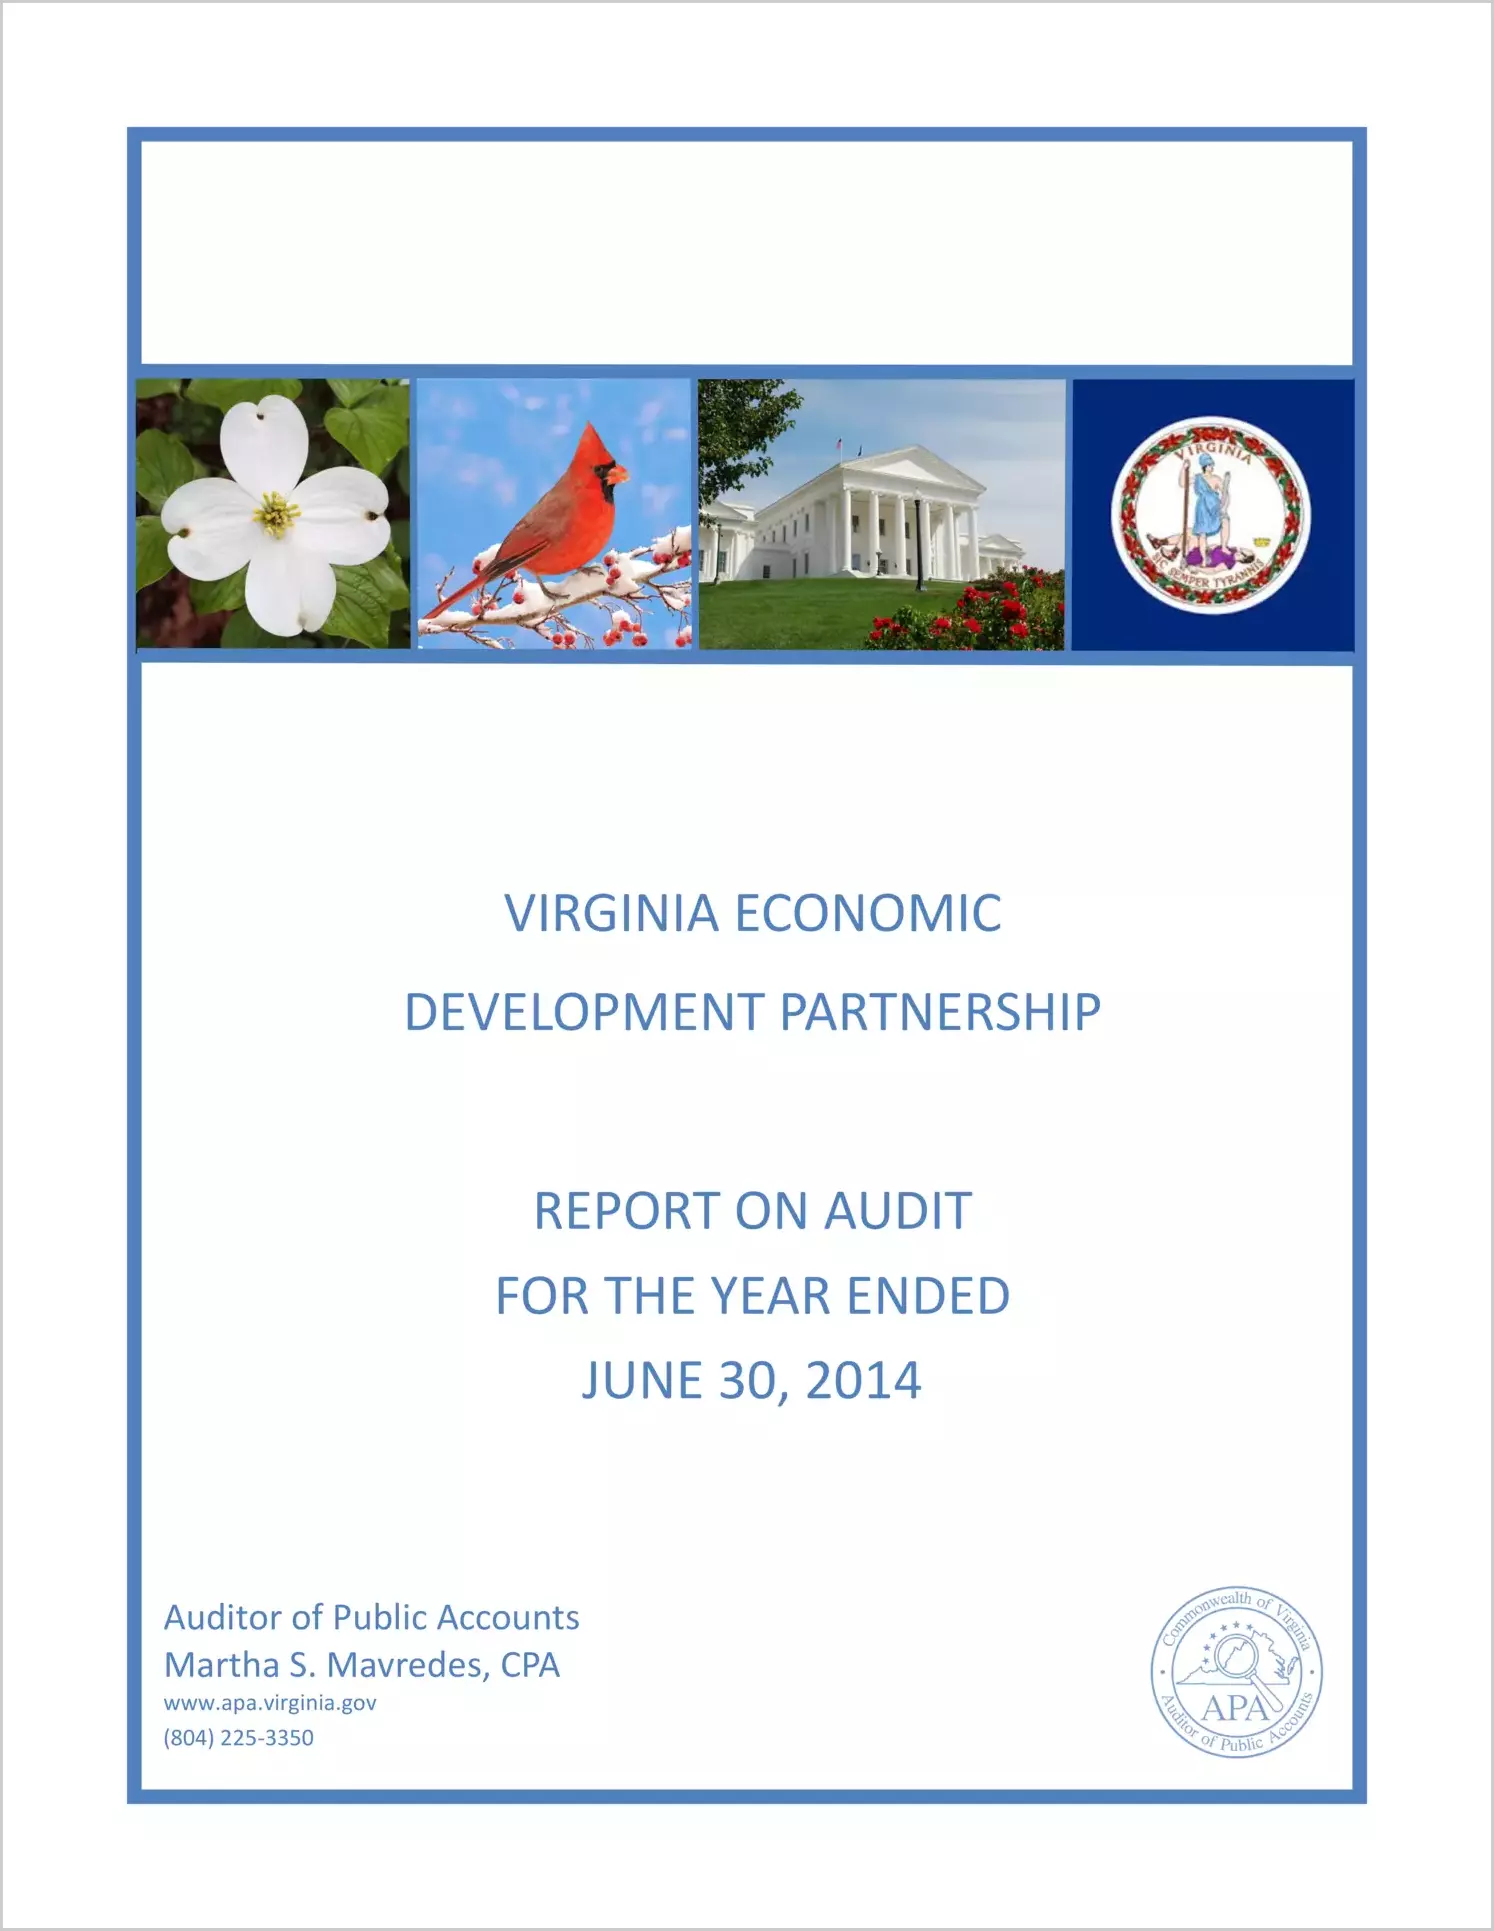 Virginia Economic Development Partnership for the year ended June 30, 2014